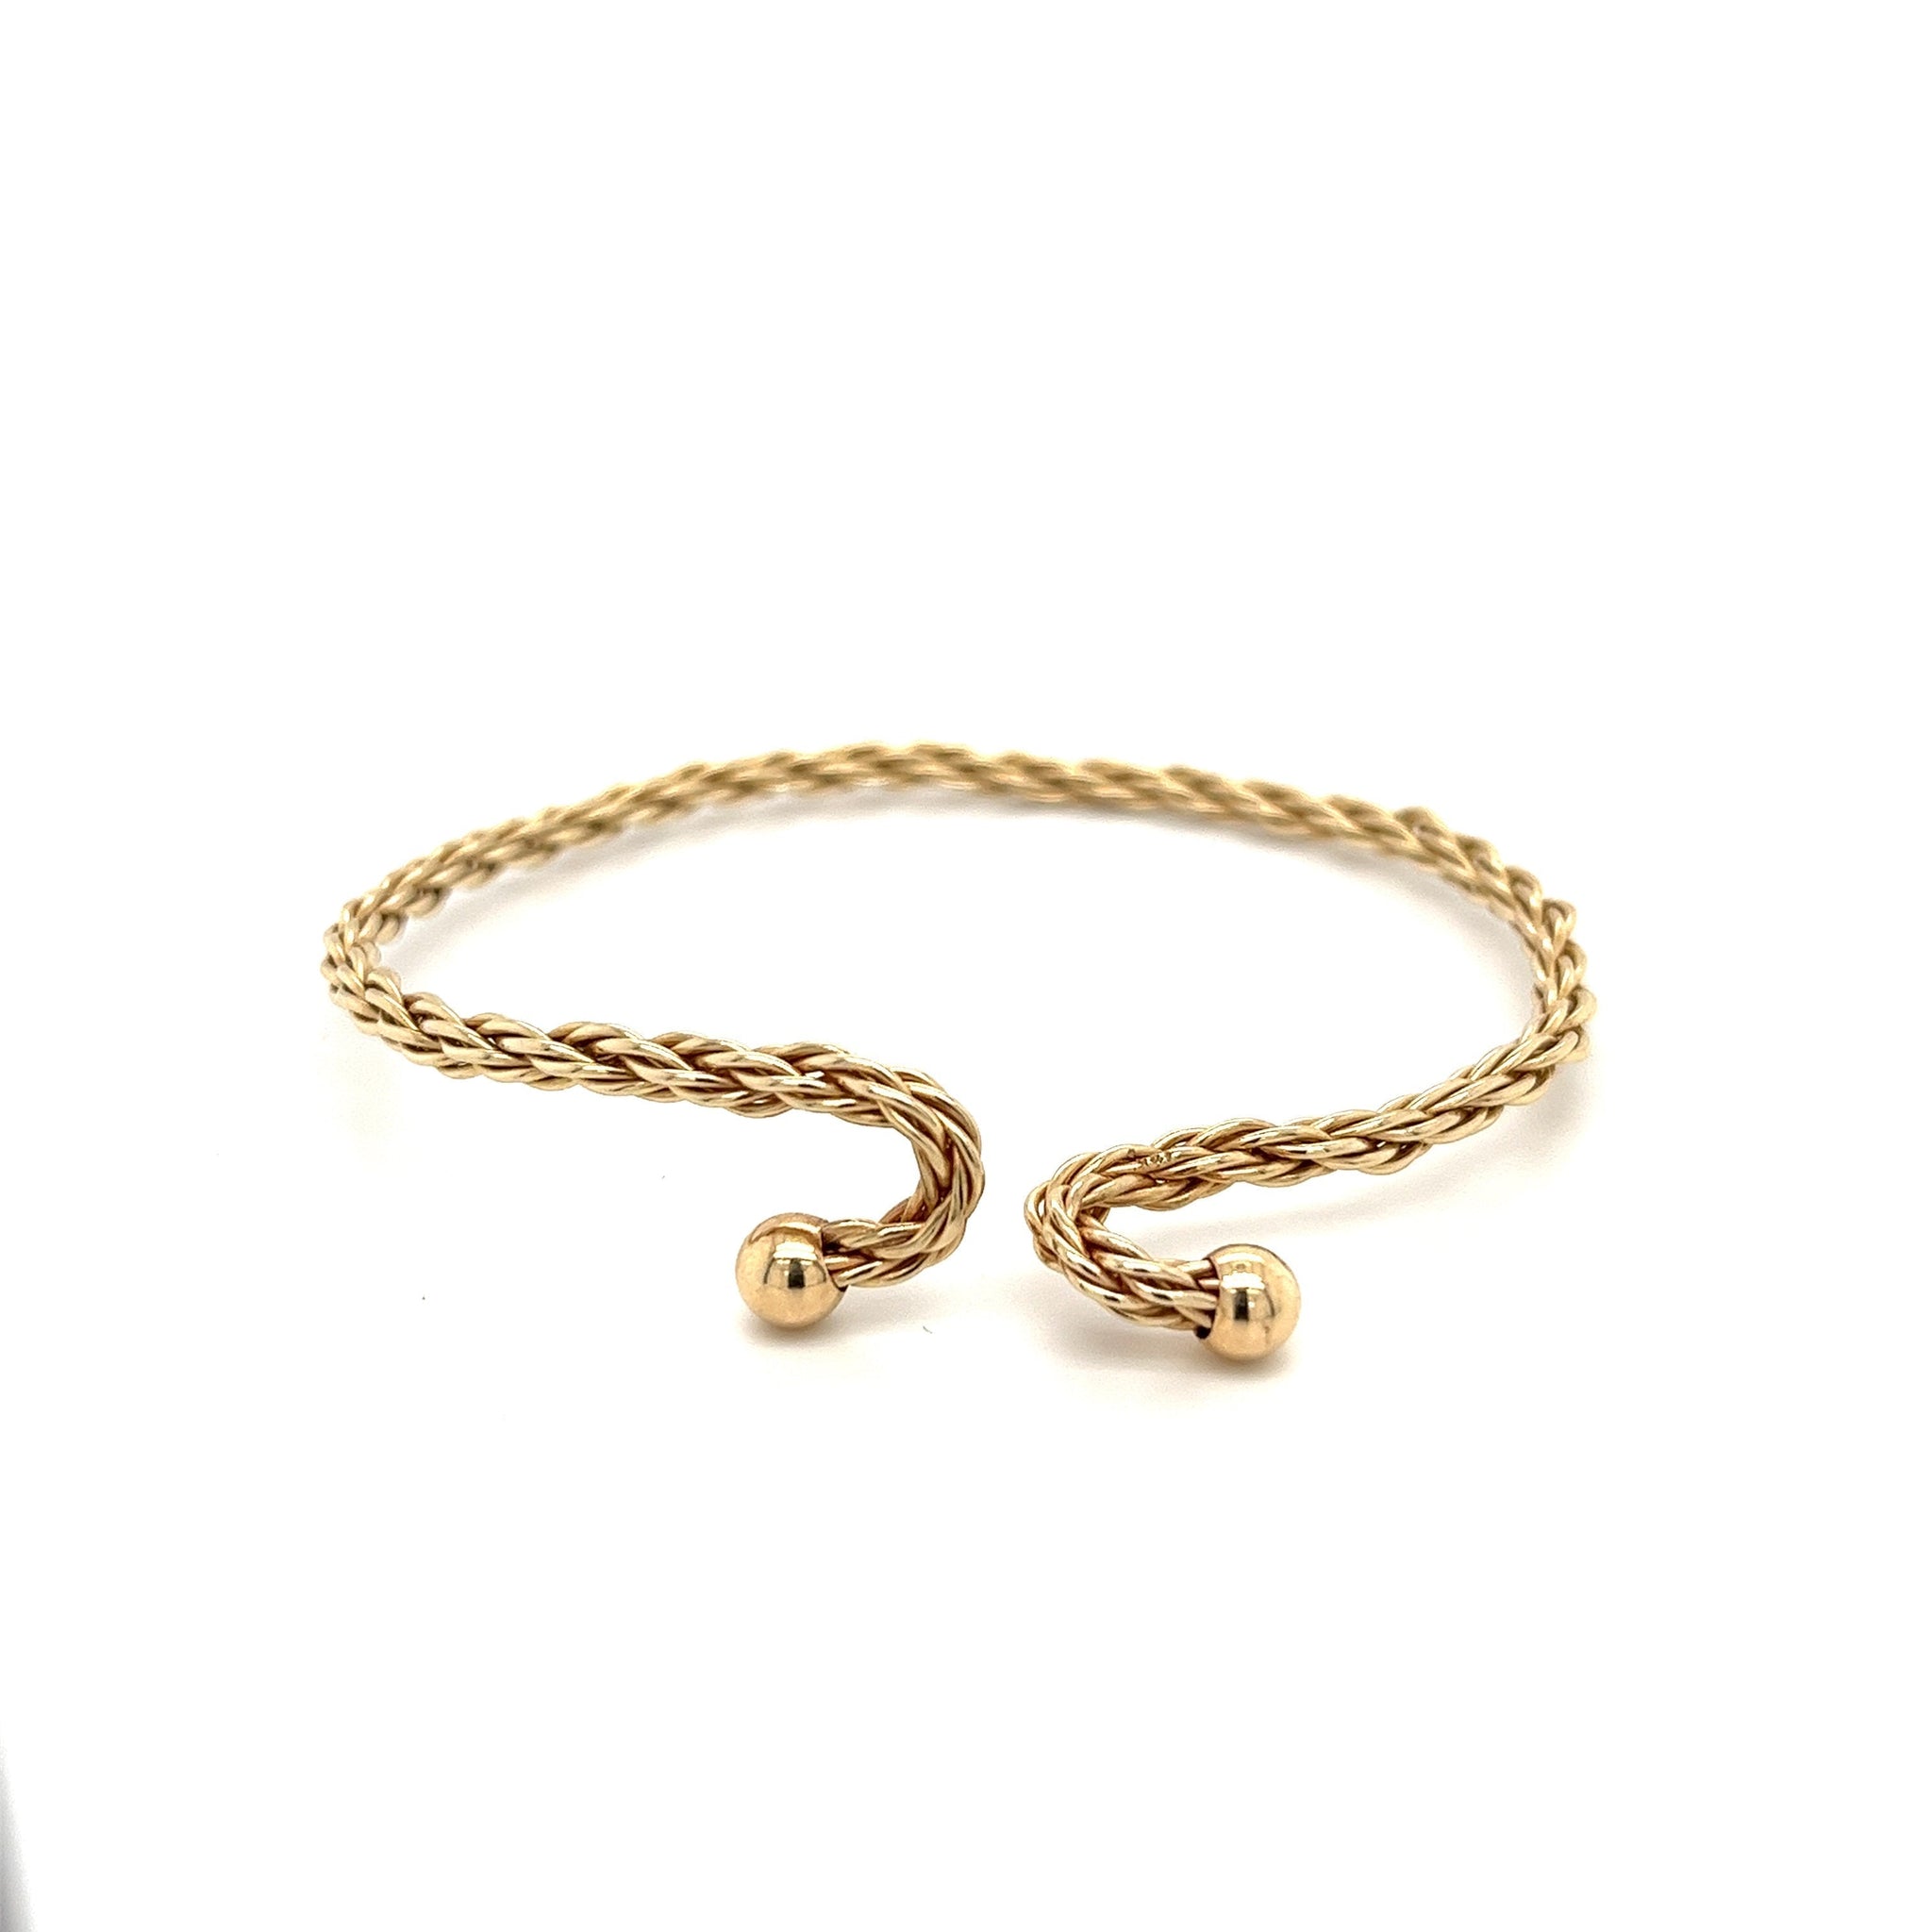 Interlocking Rope Chain Bangle Bracelet in 14k Yellow Gold-Bangle-ASSAY